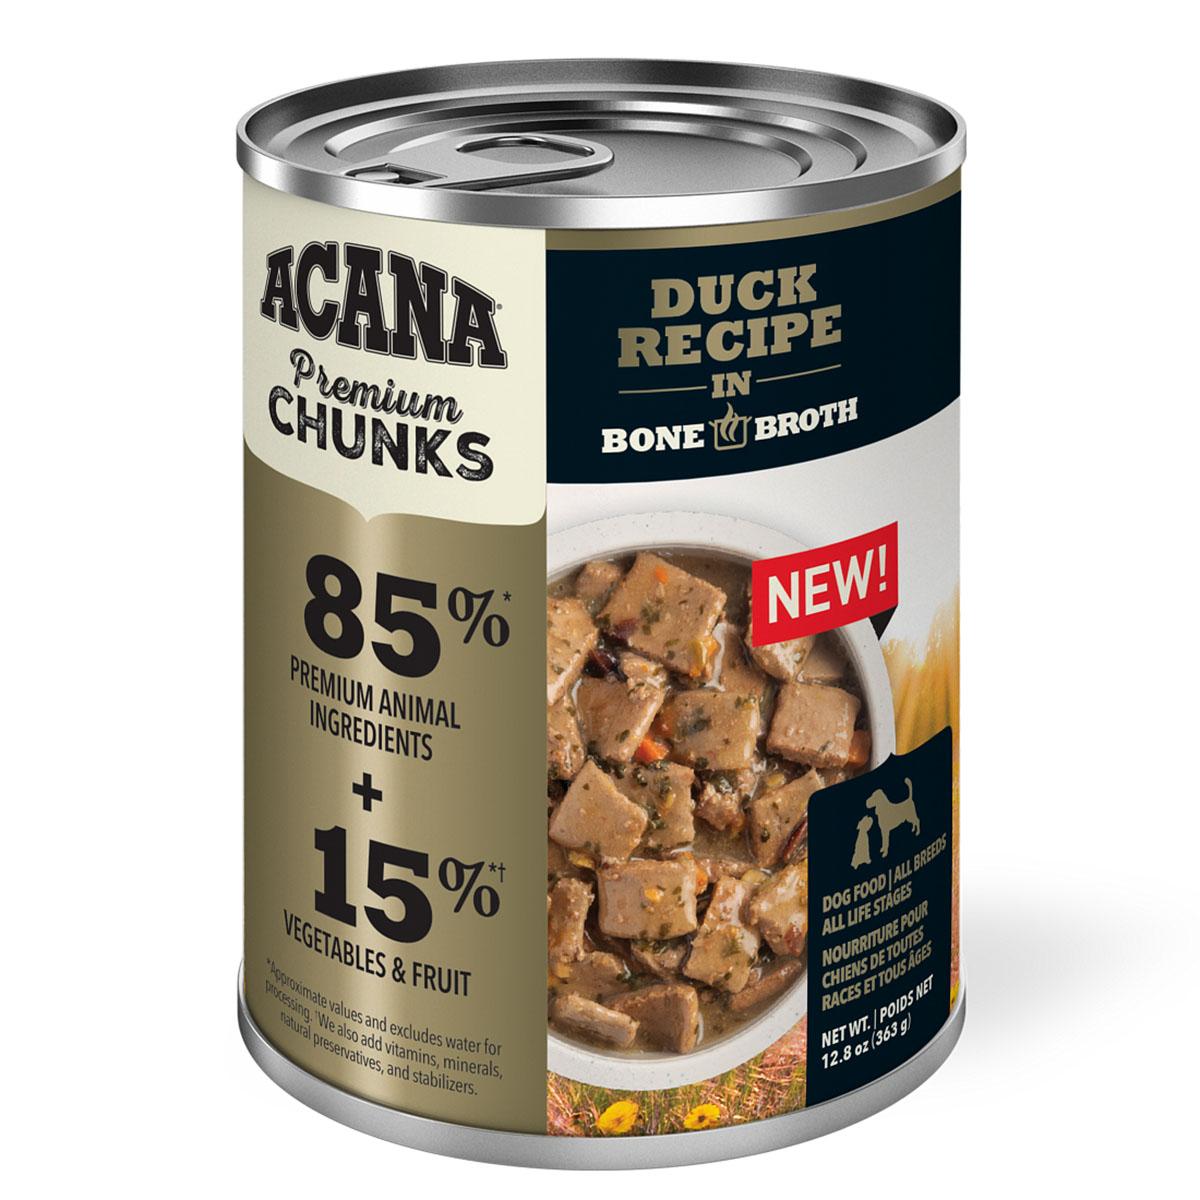 Acana Premium Chunks Duck Recipe in Bone Broth Canned Dog Food 